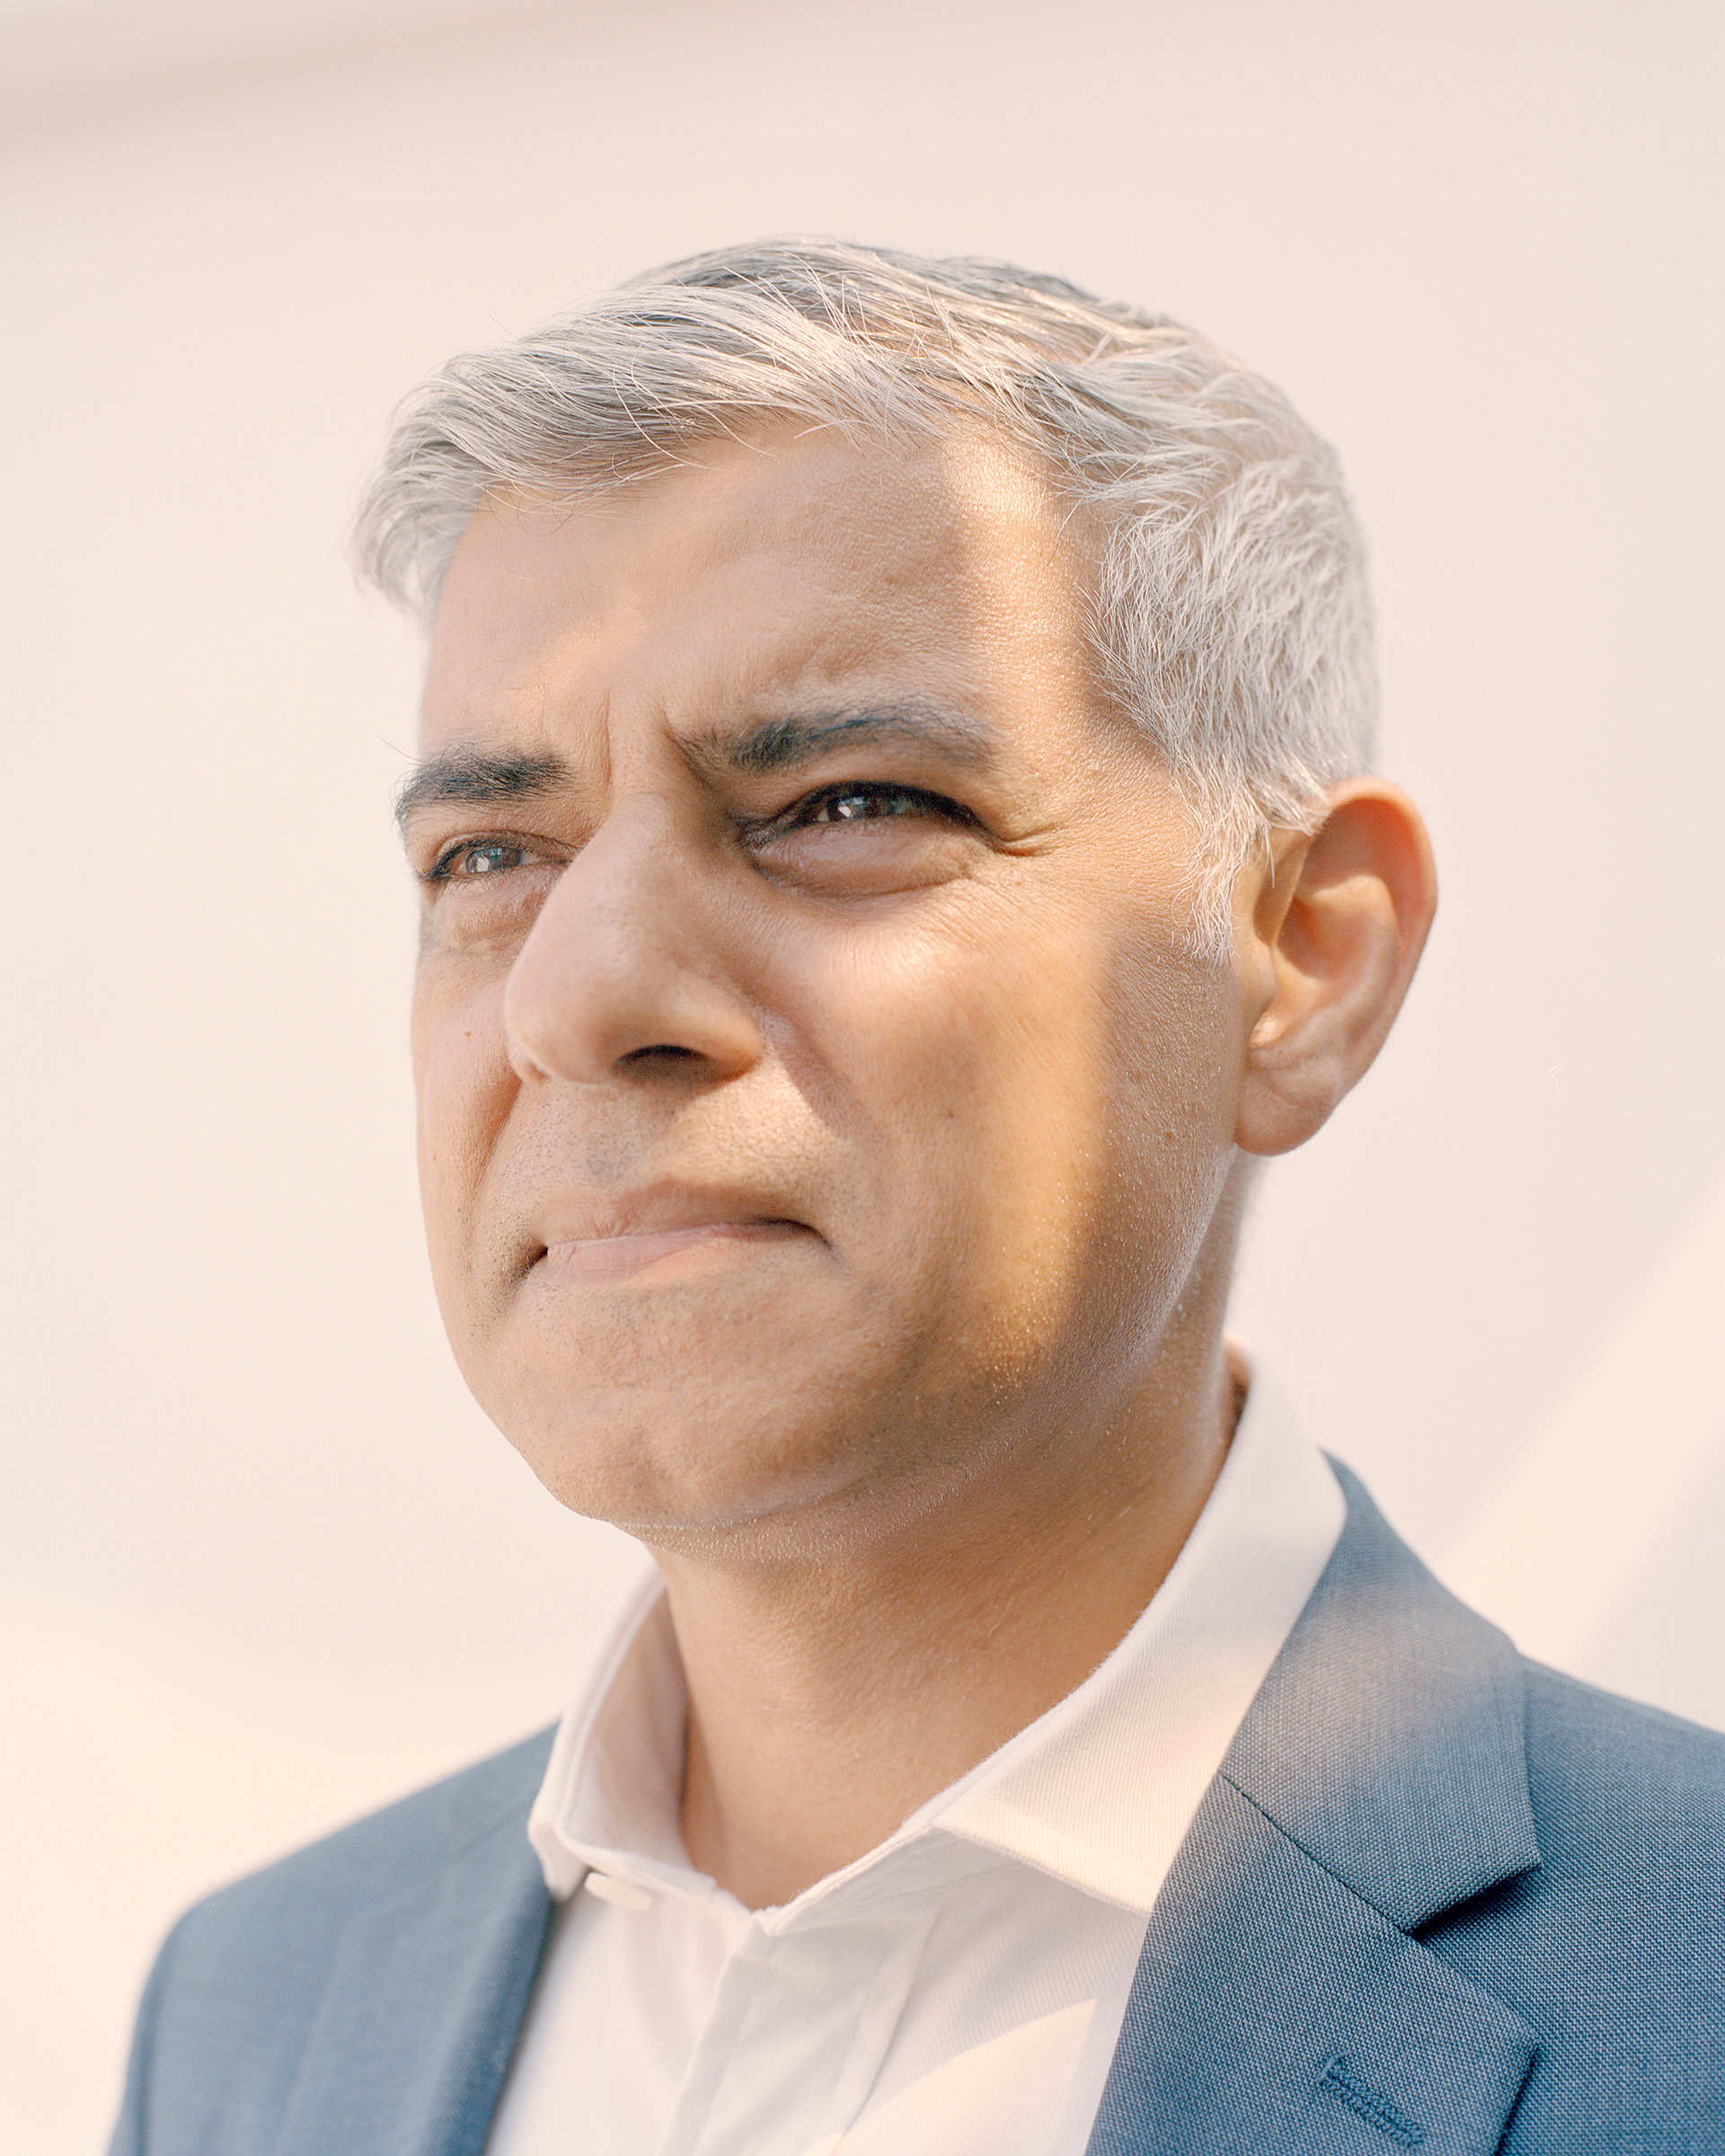 london-mayor-sadiq-khan-2021-portrait